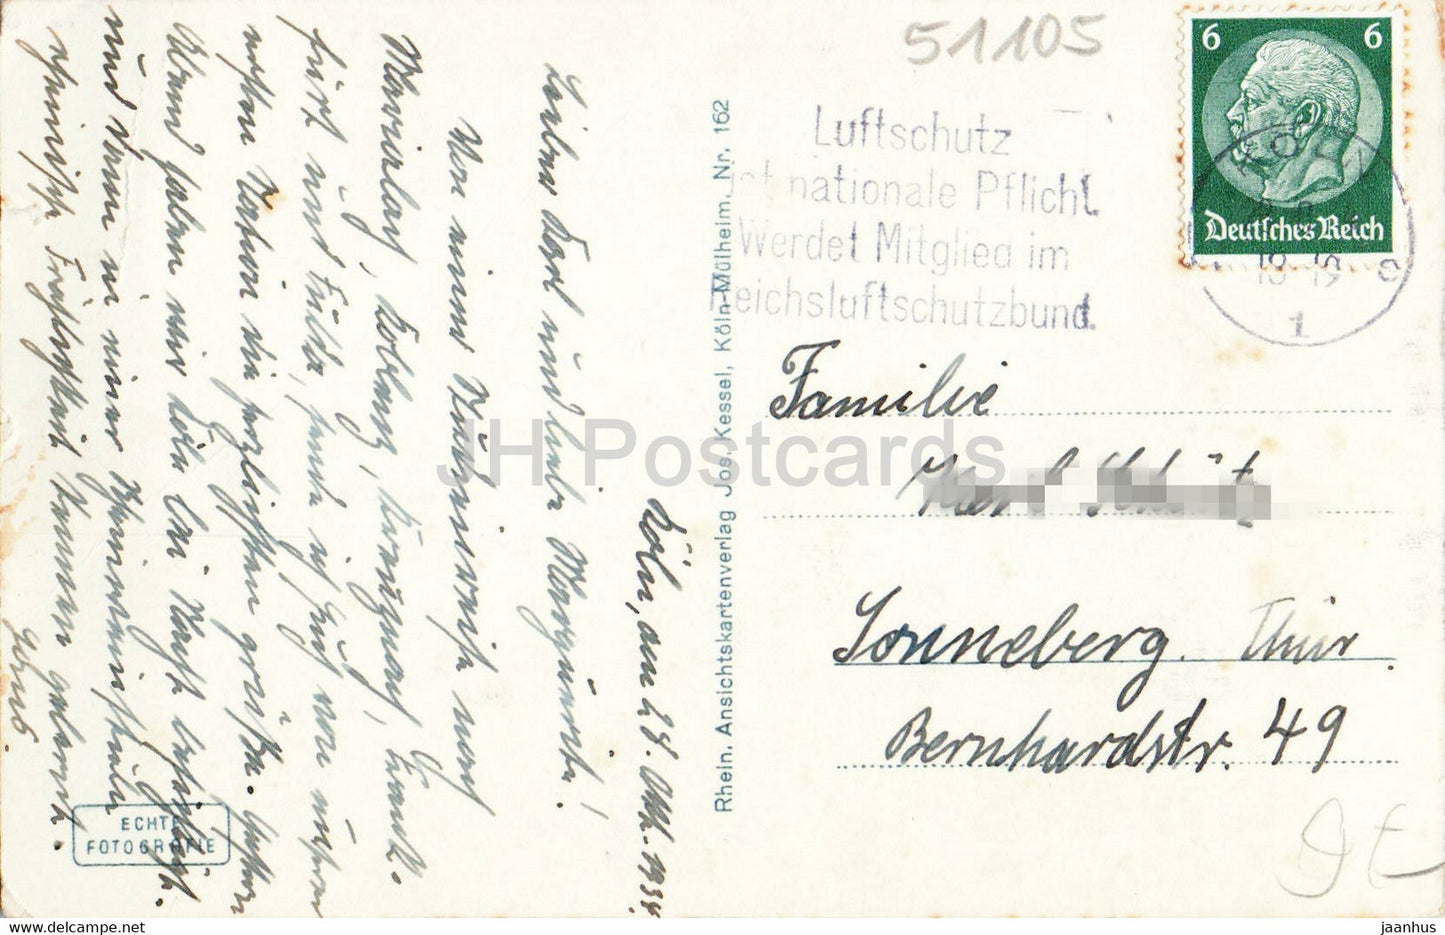 Cologne - Cologne - Hindenburgbrucke mit Blick auf Koln - pont - tramway - 1934 - carte postale ancienne - Allemagne - utilisé